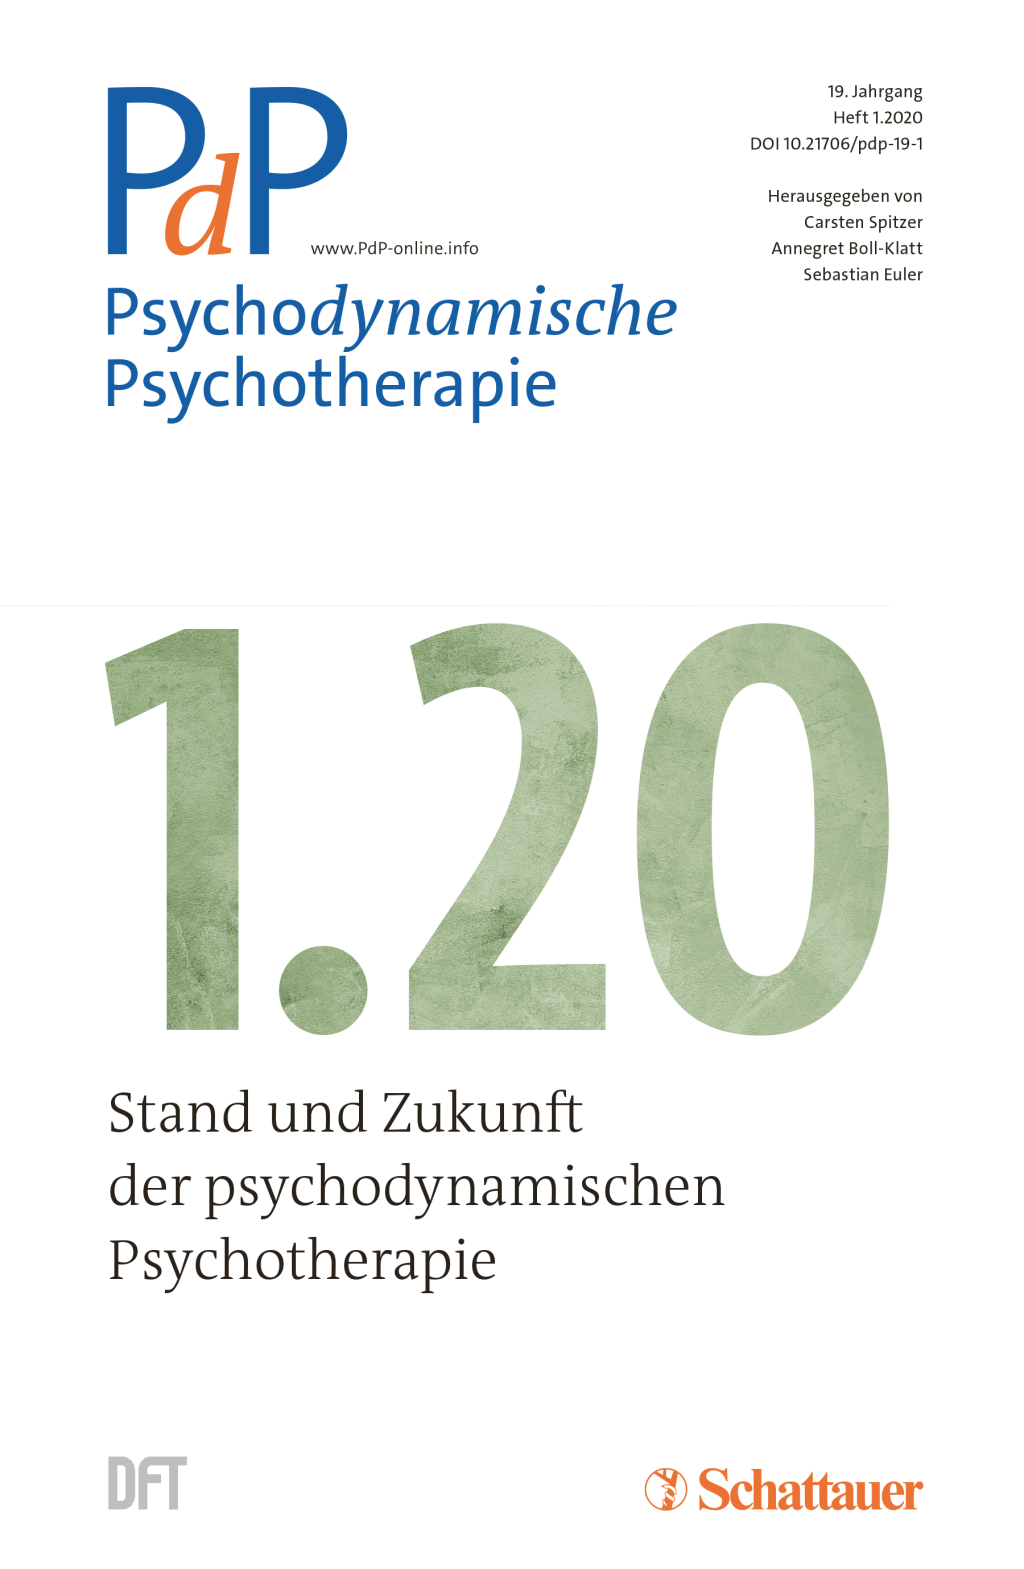 Picture of: Psychotraumatologie – Psychodynamische Psychotherapie – Psychoanalyse